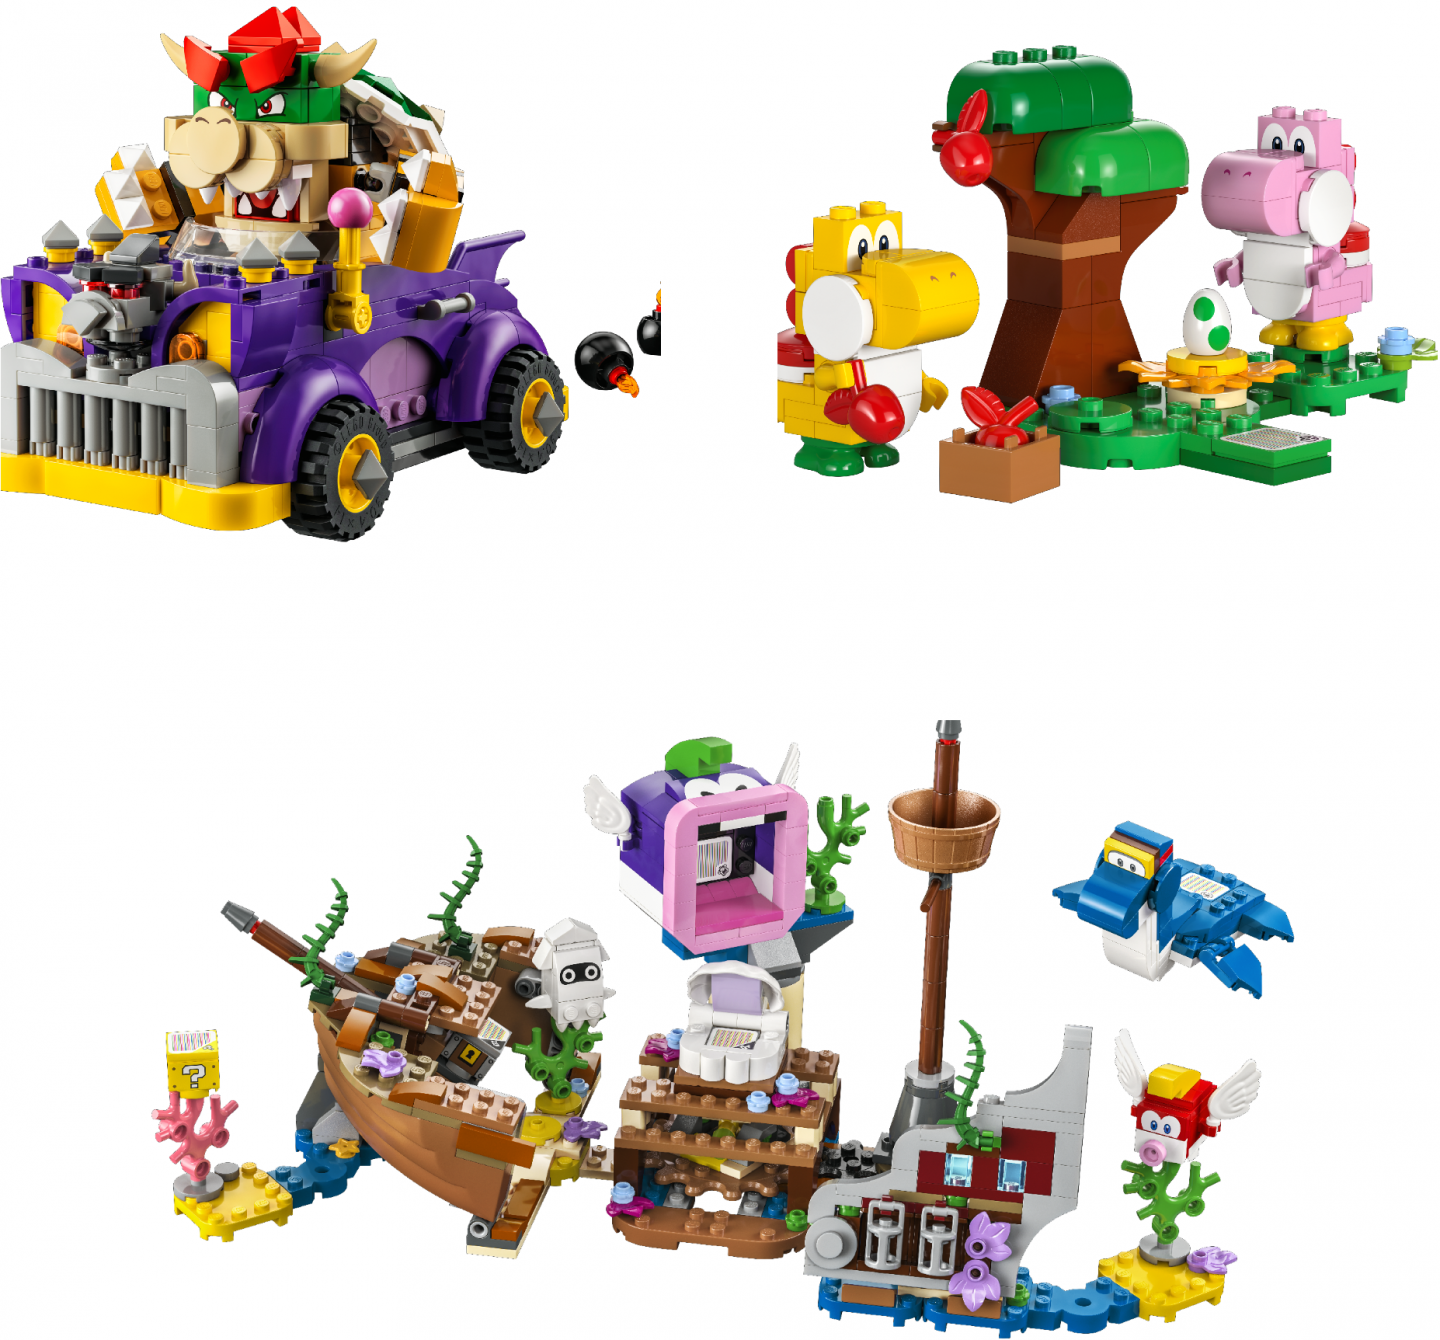 Officiële reveal van Mario LEGO sets